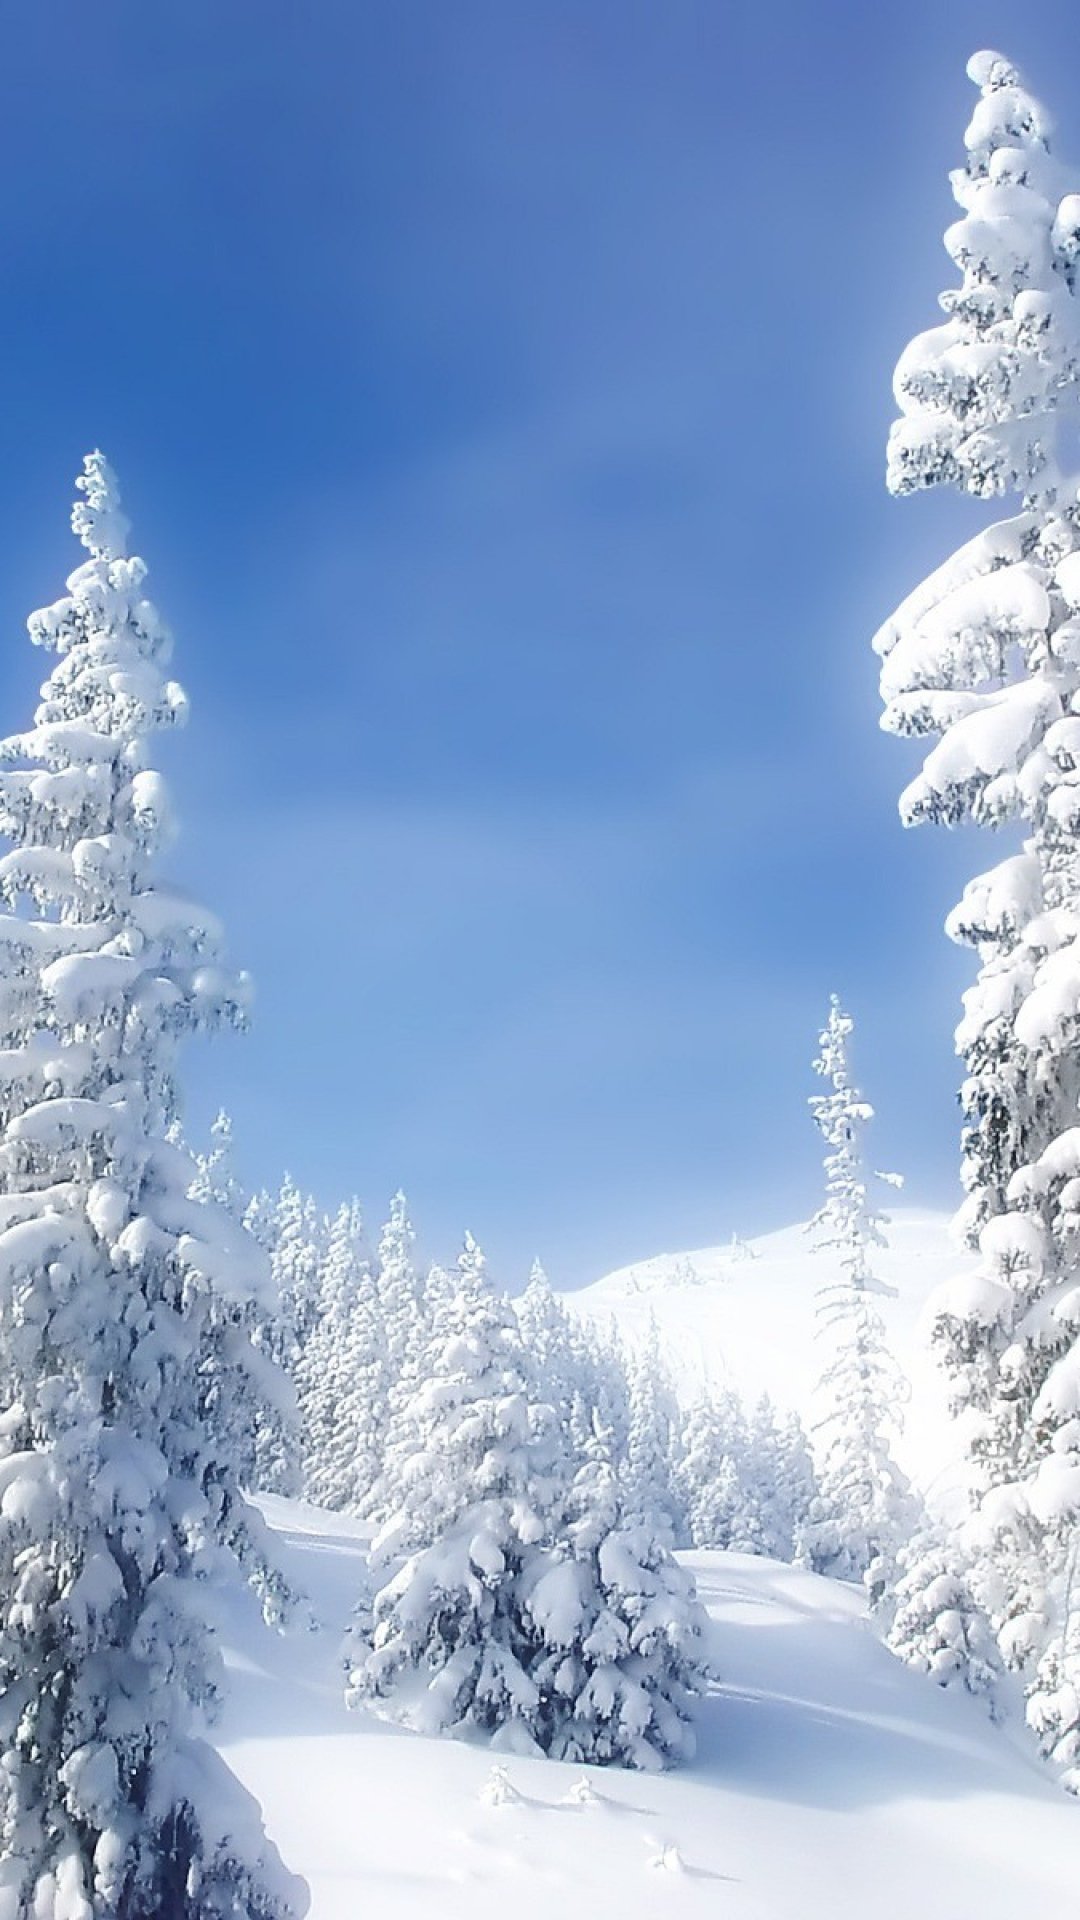 White Winter Forest